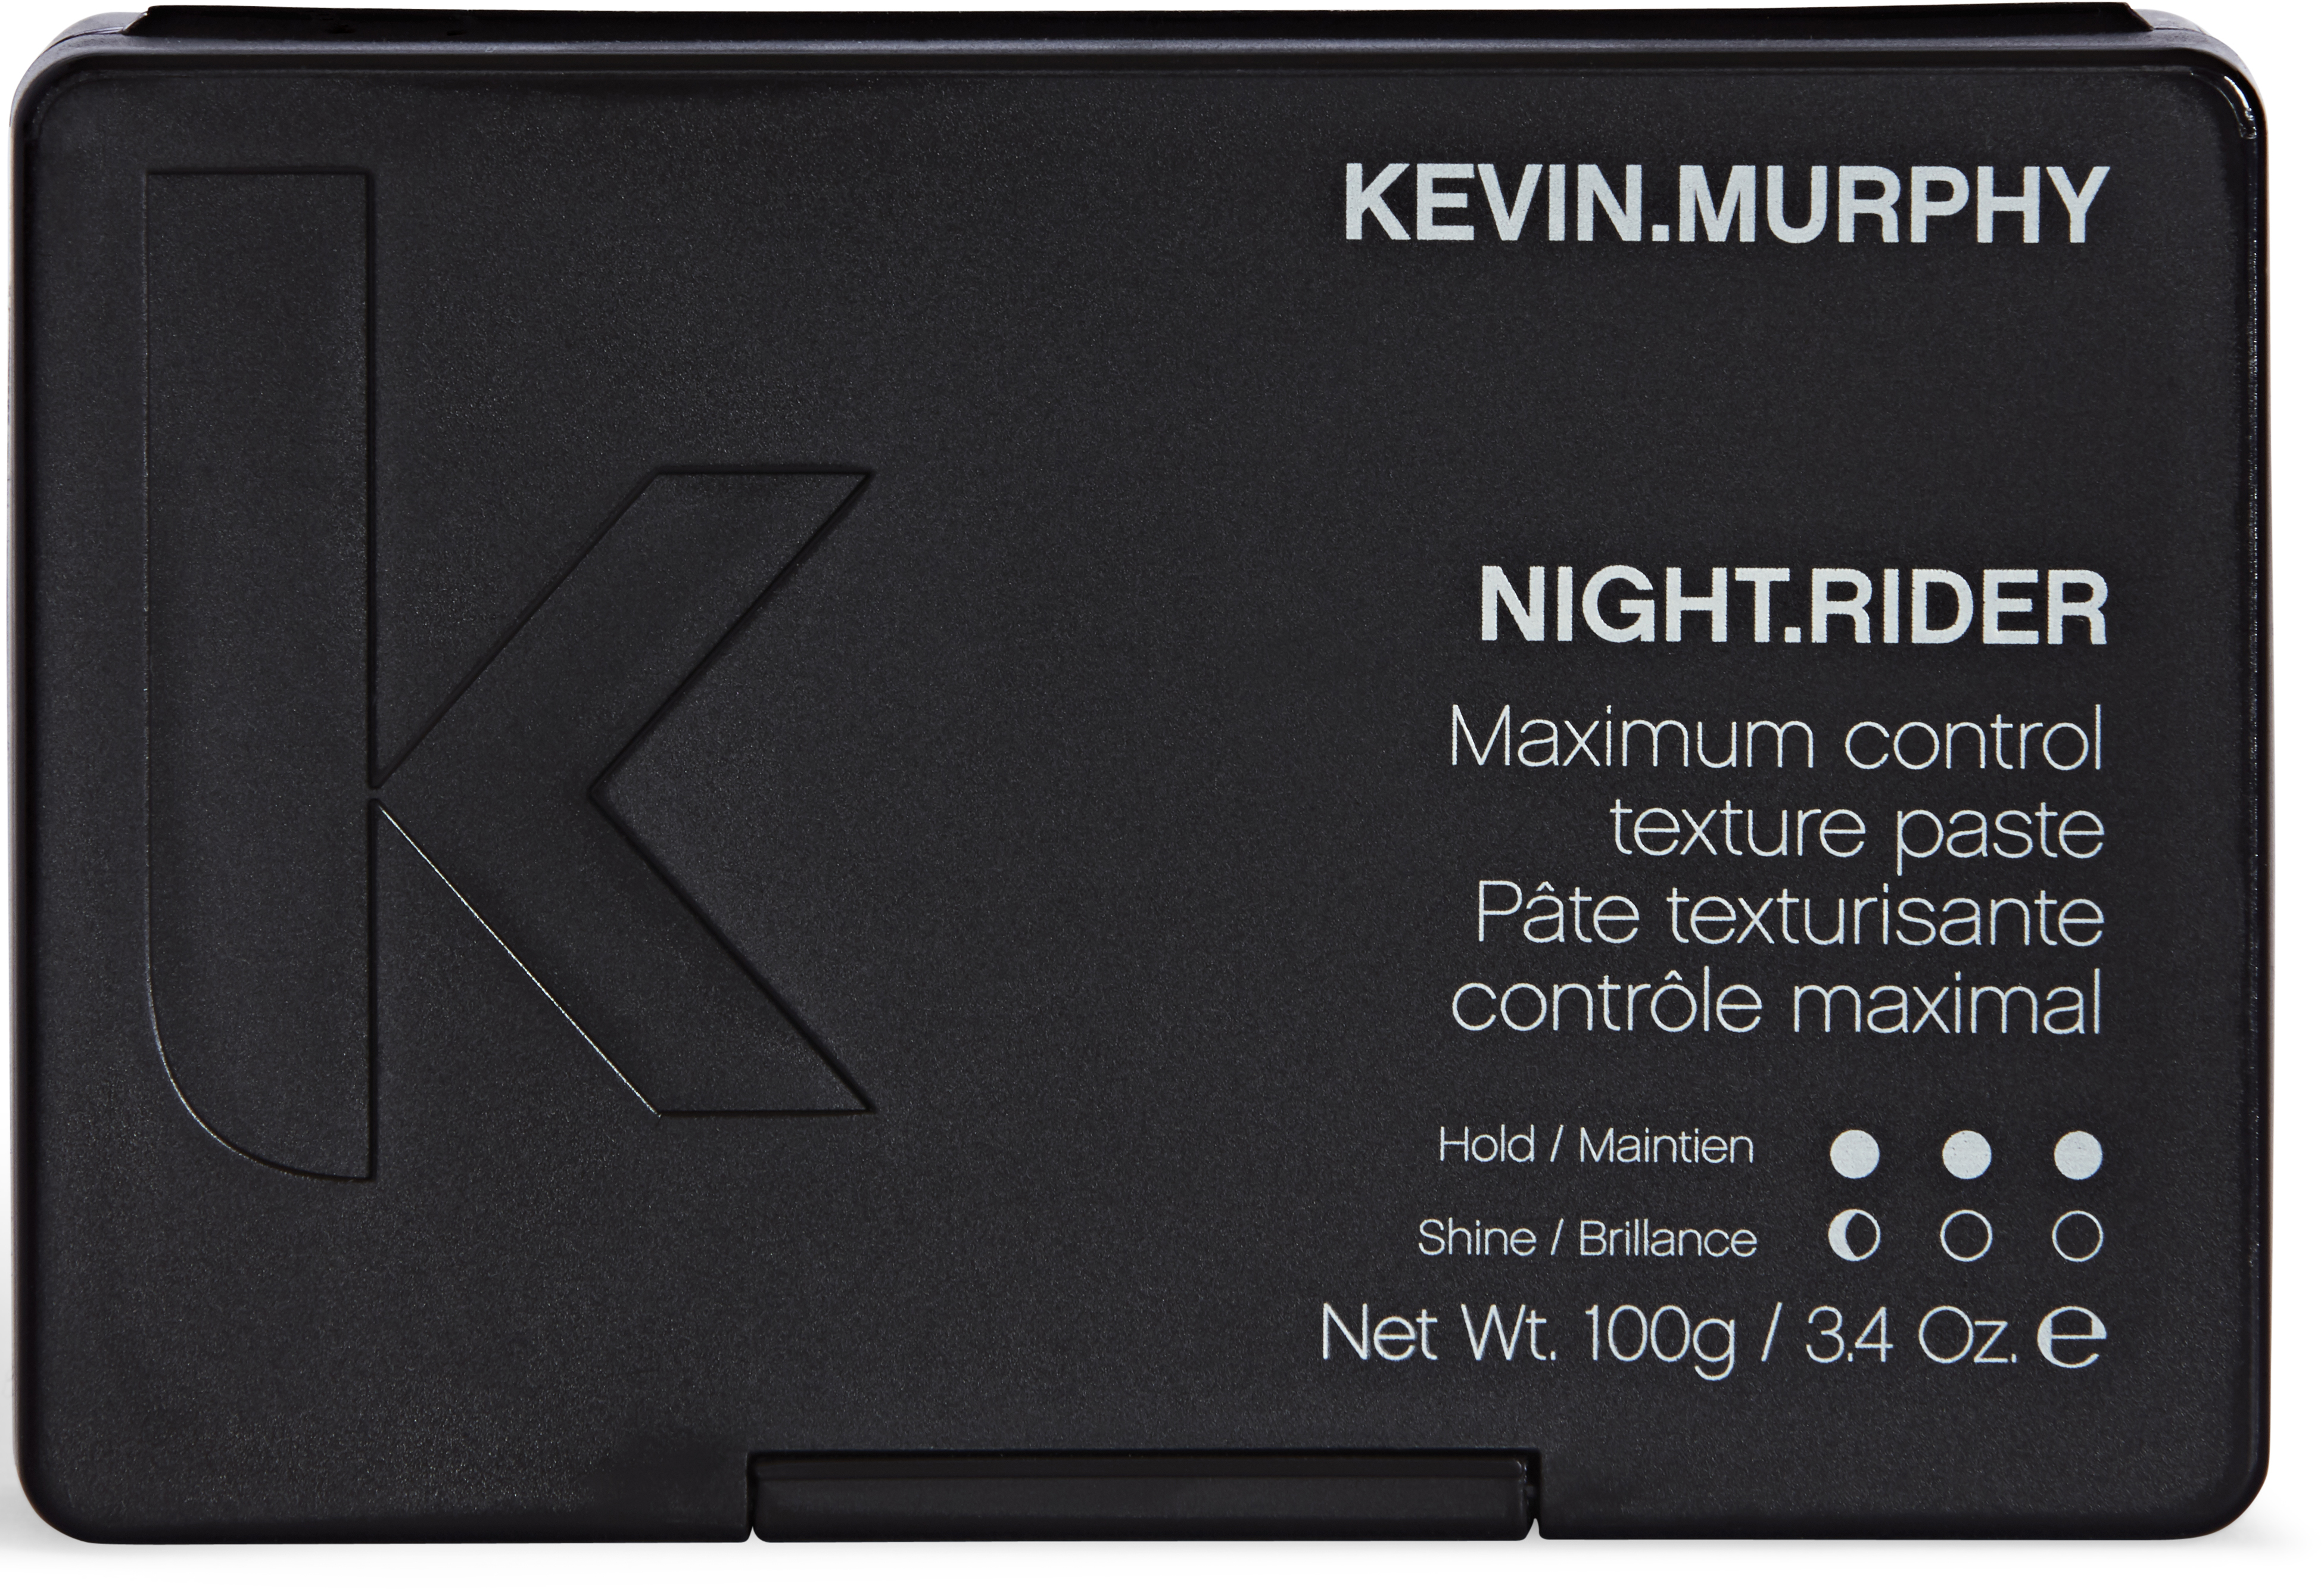 Kevin Murphy Night Rider Matte Texture Paste